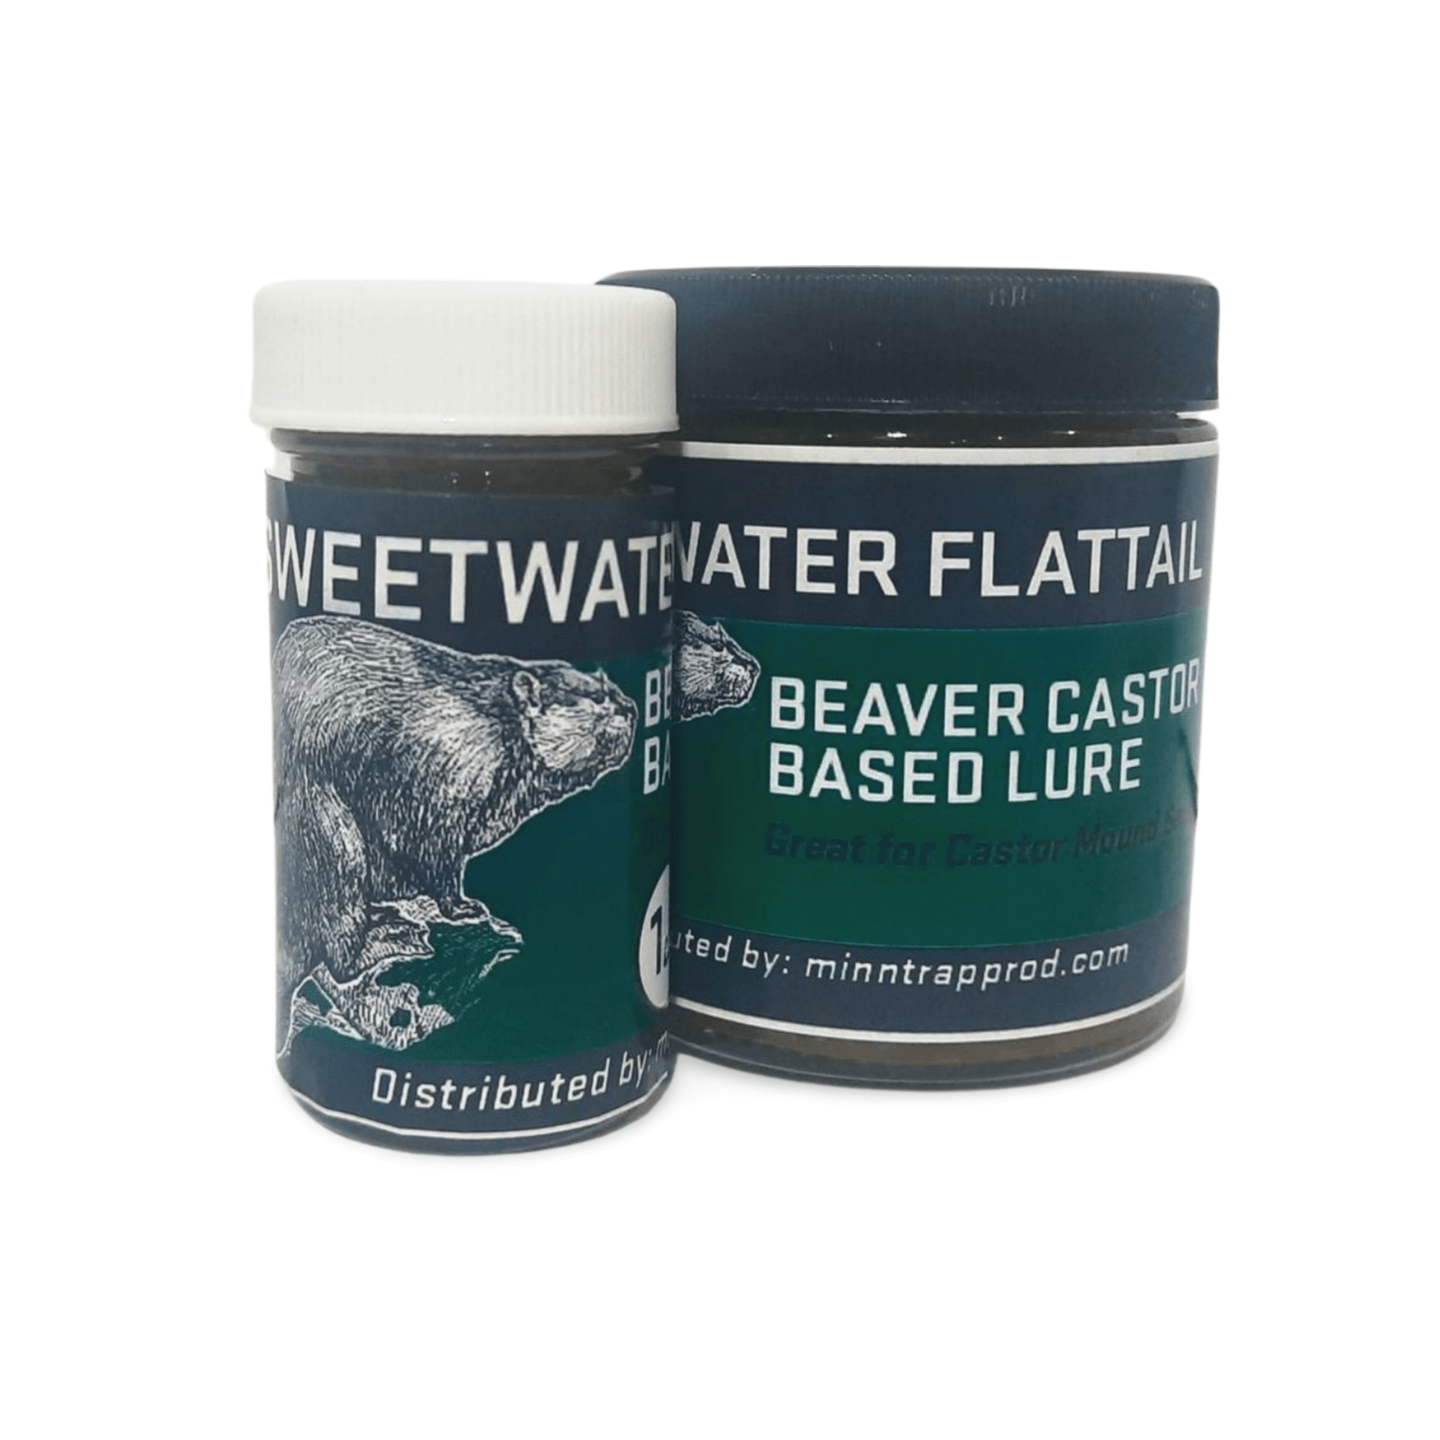 Sweetwater Flattail